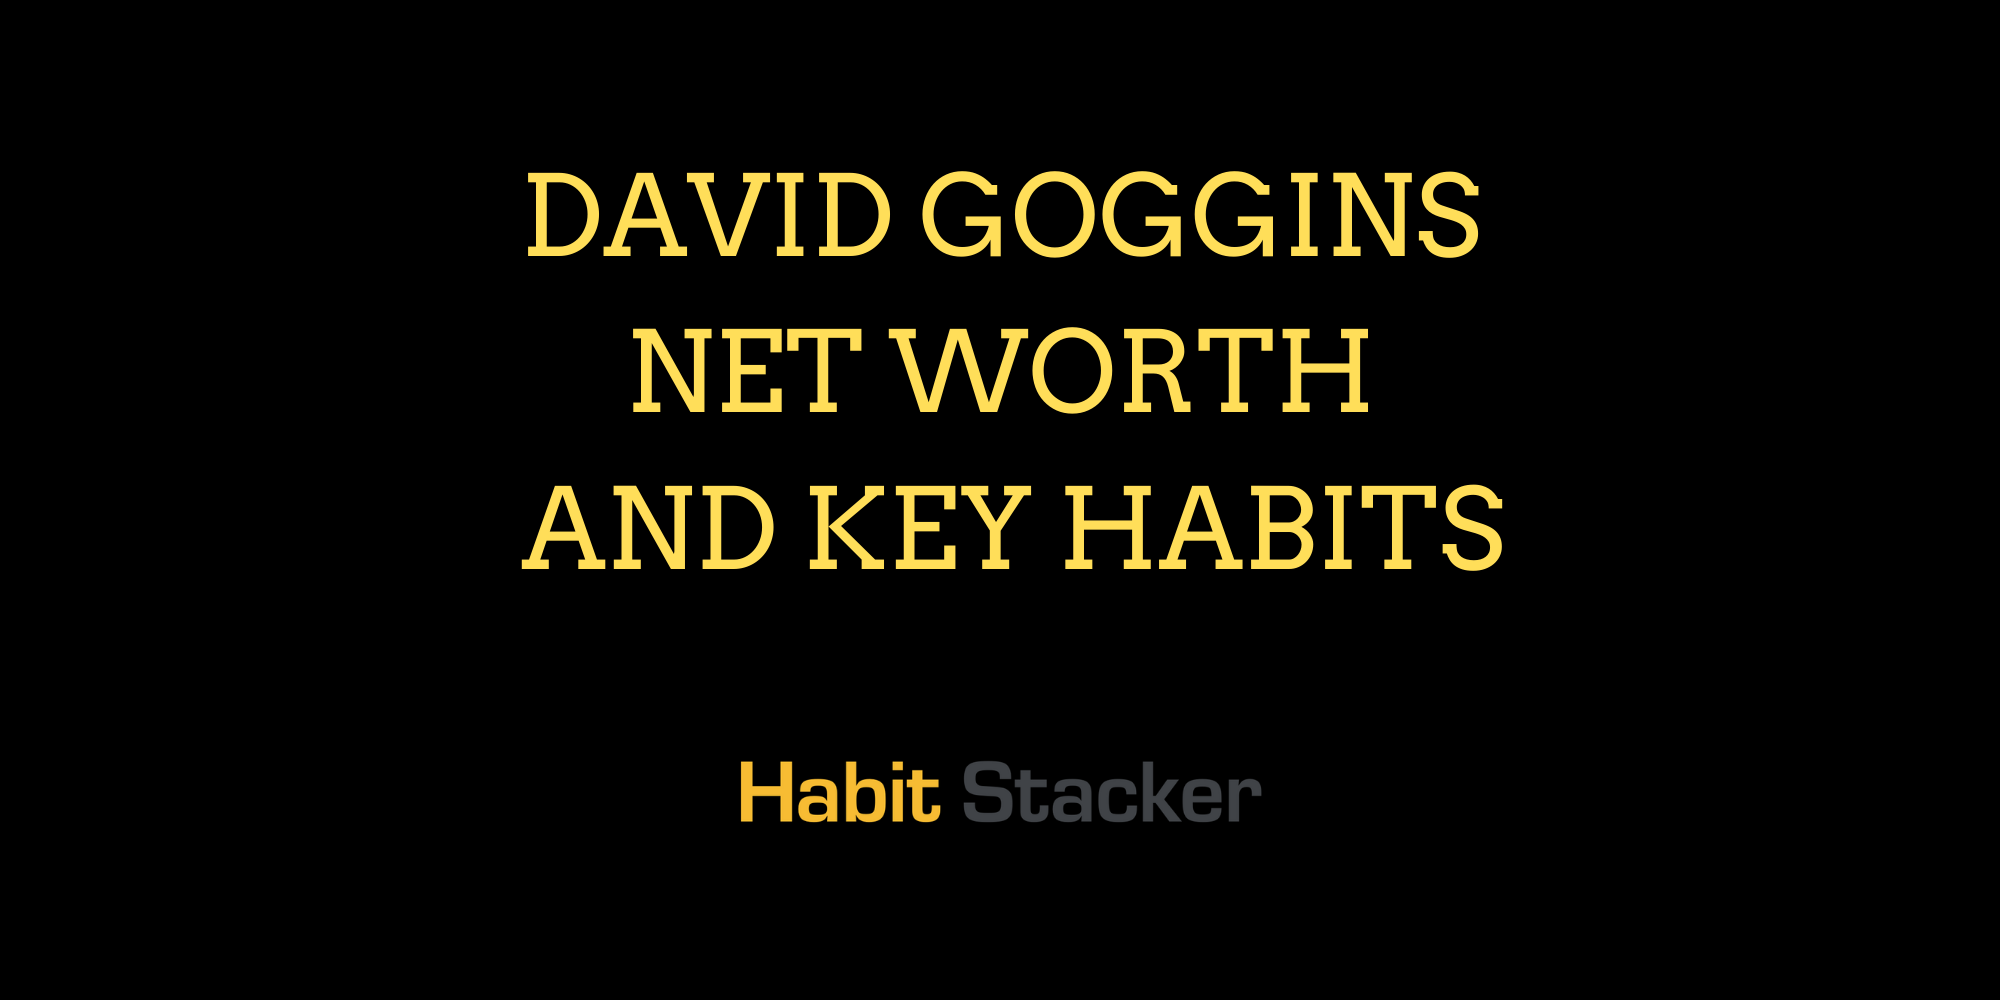 David Goggins Net Worth and Key Habits